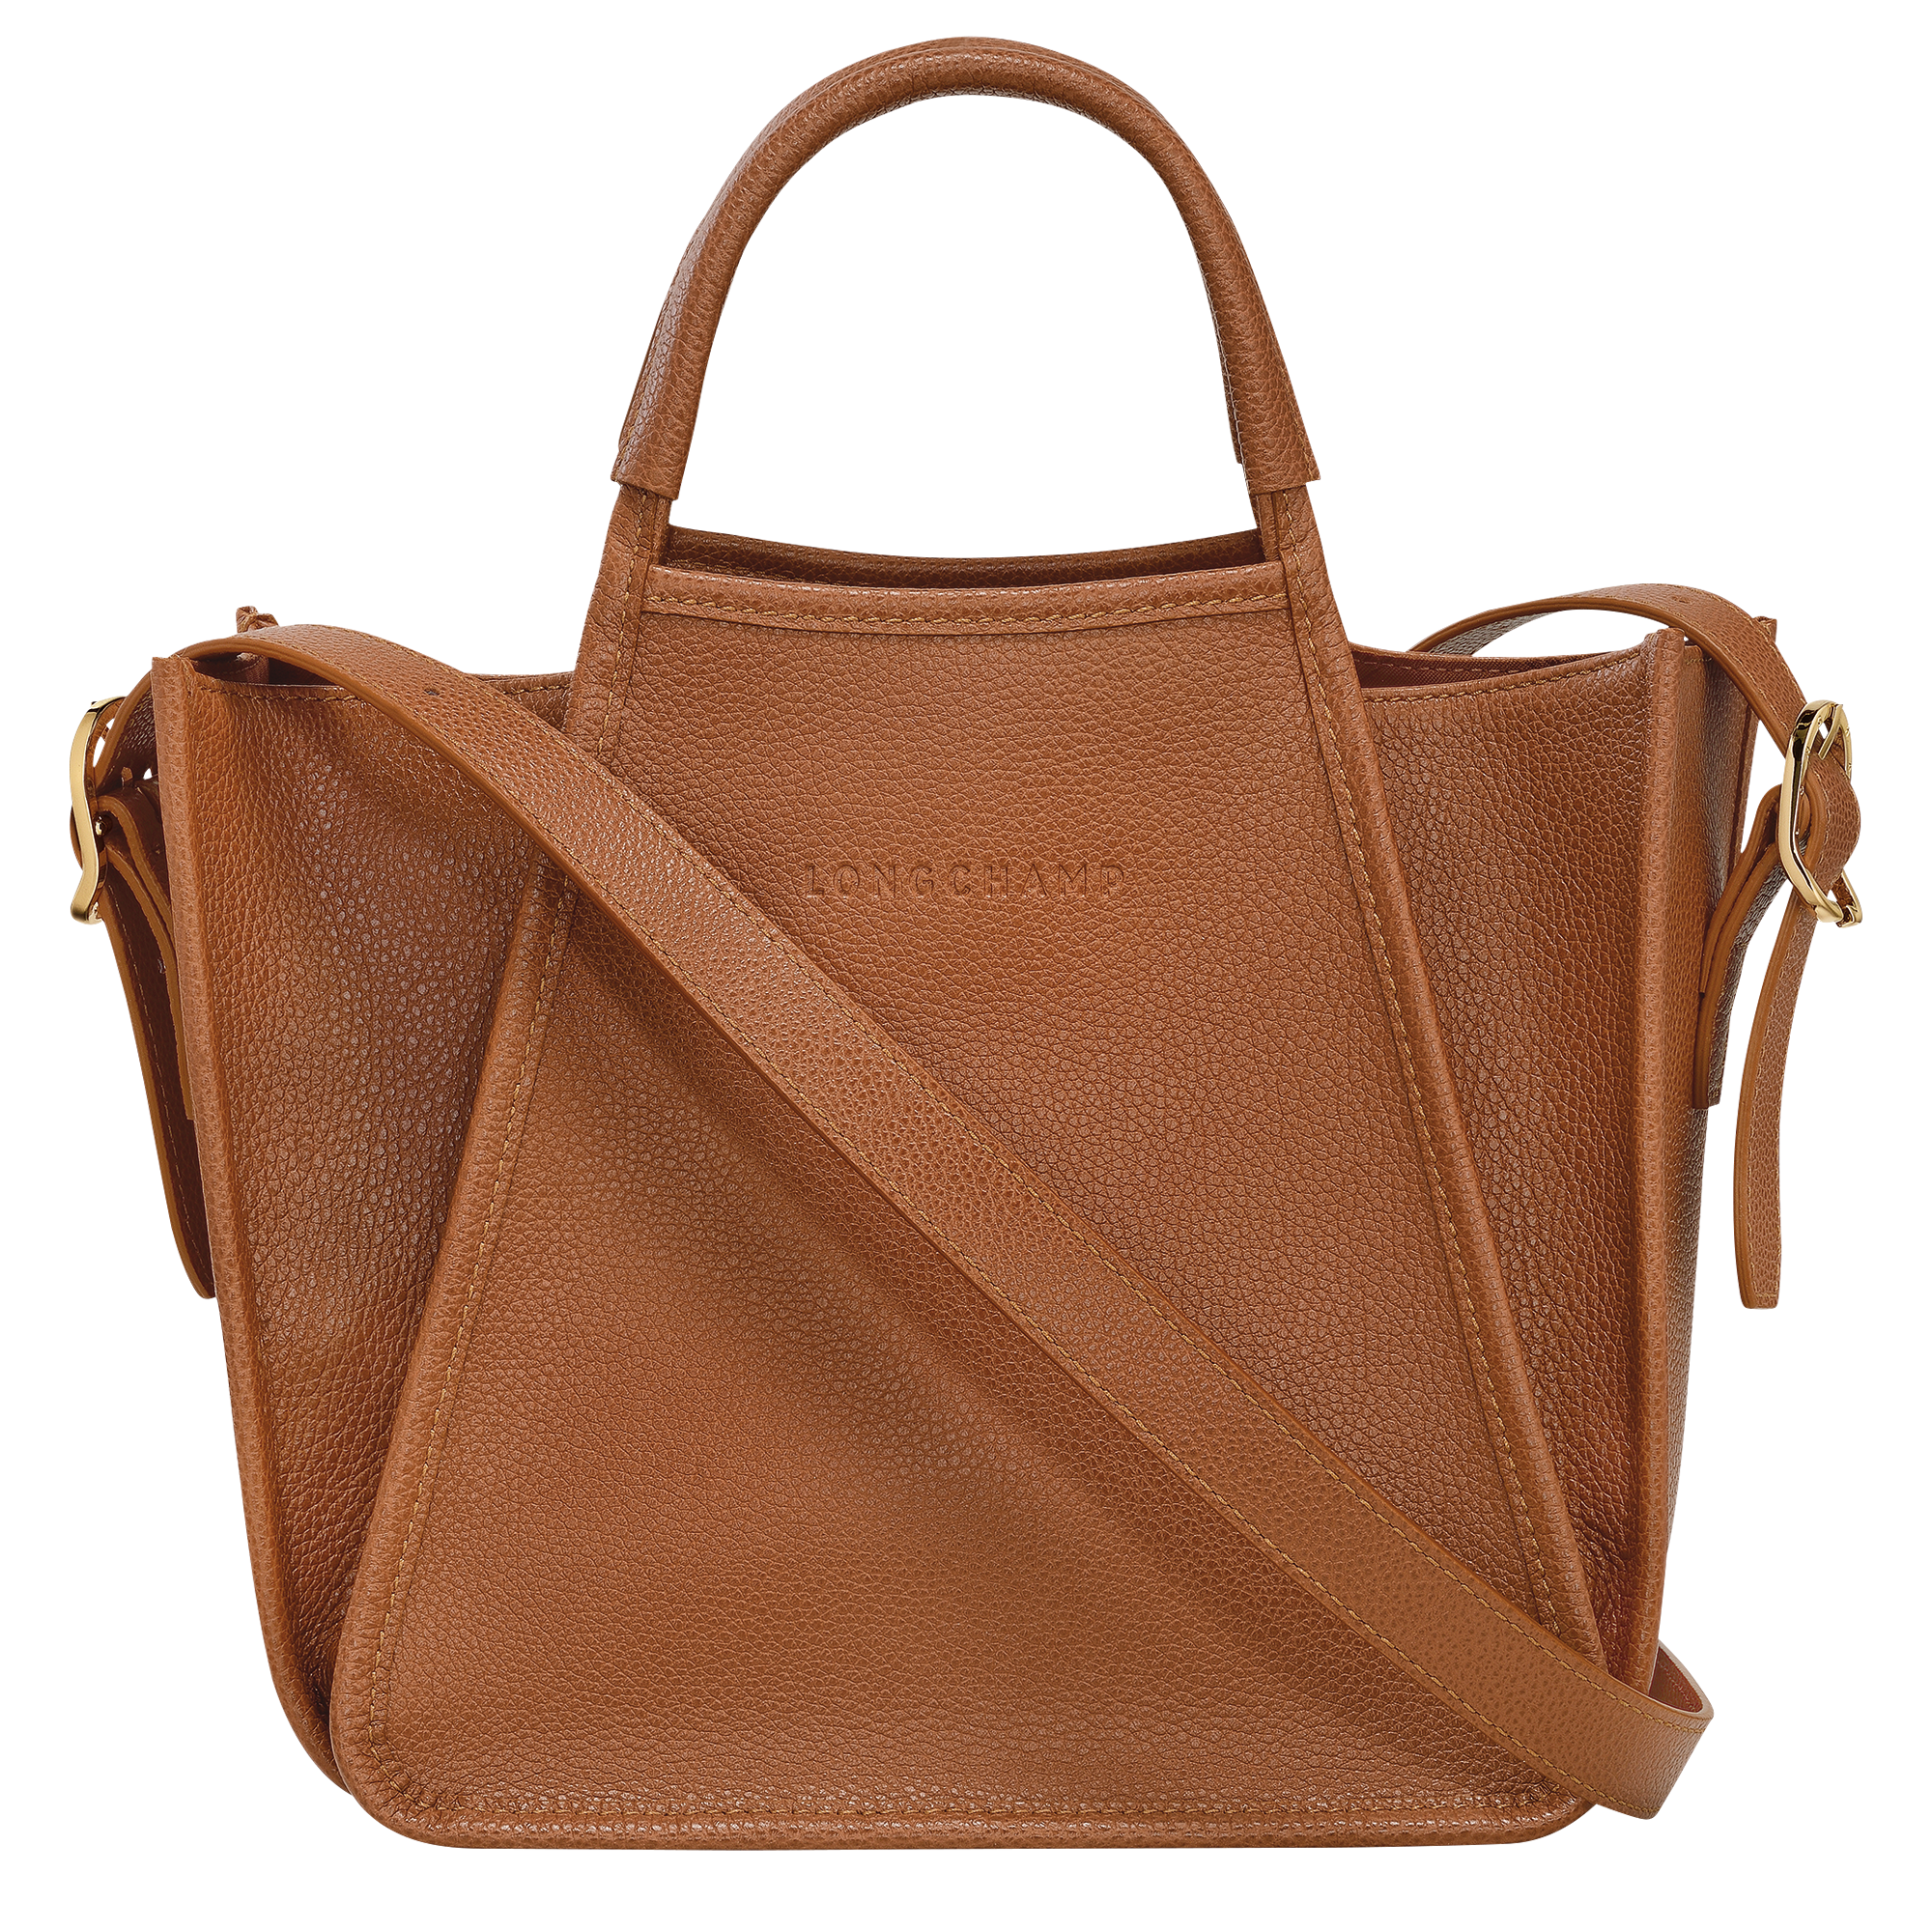 Le Foulonné Handbag S, Caramel